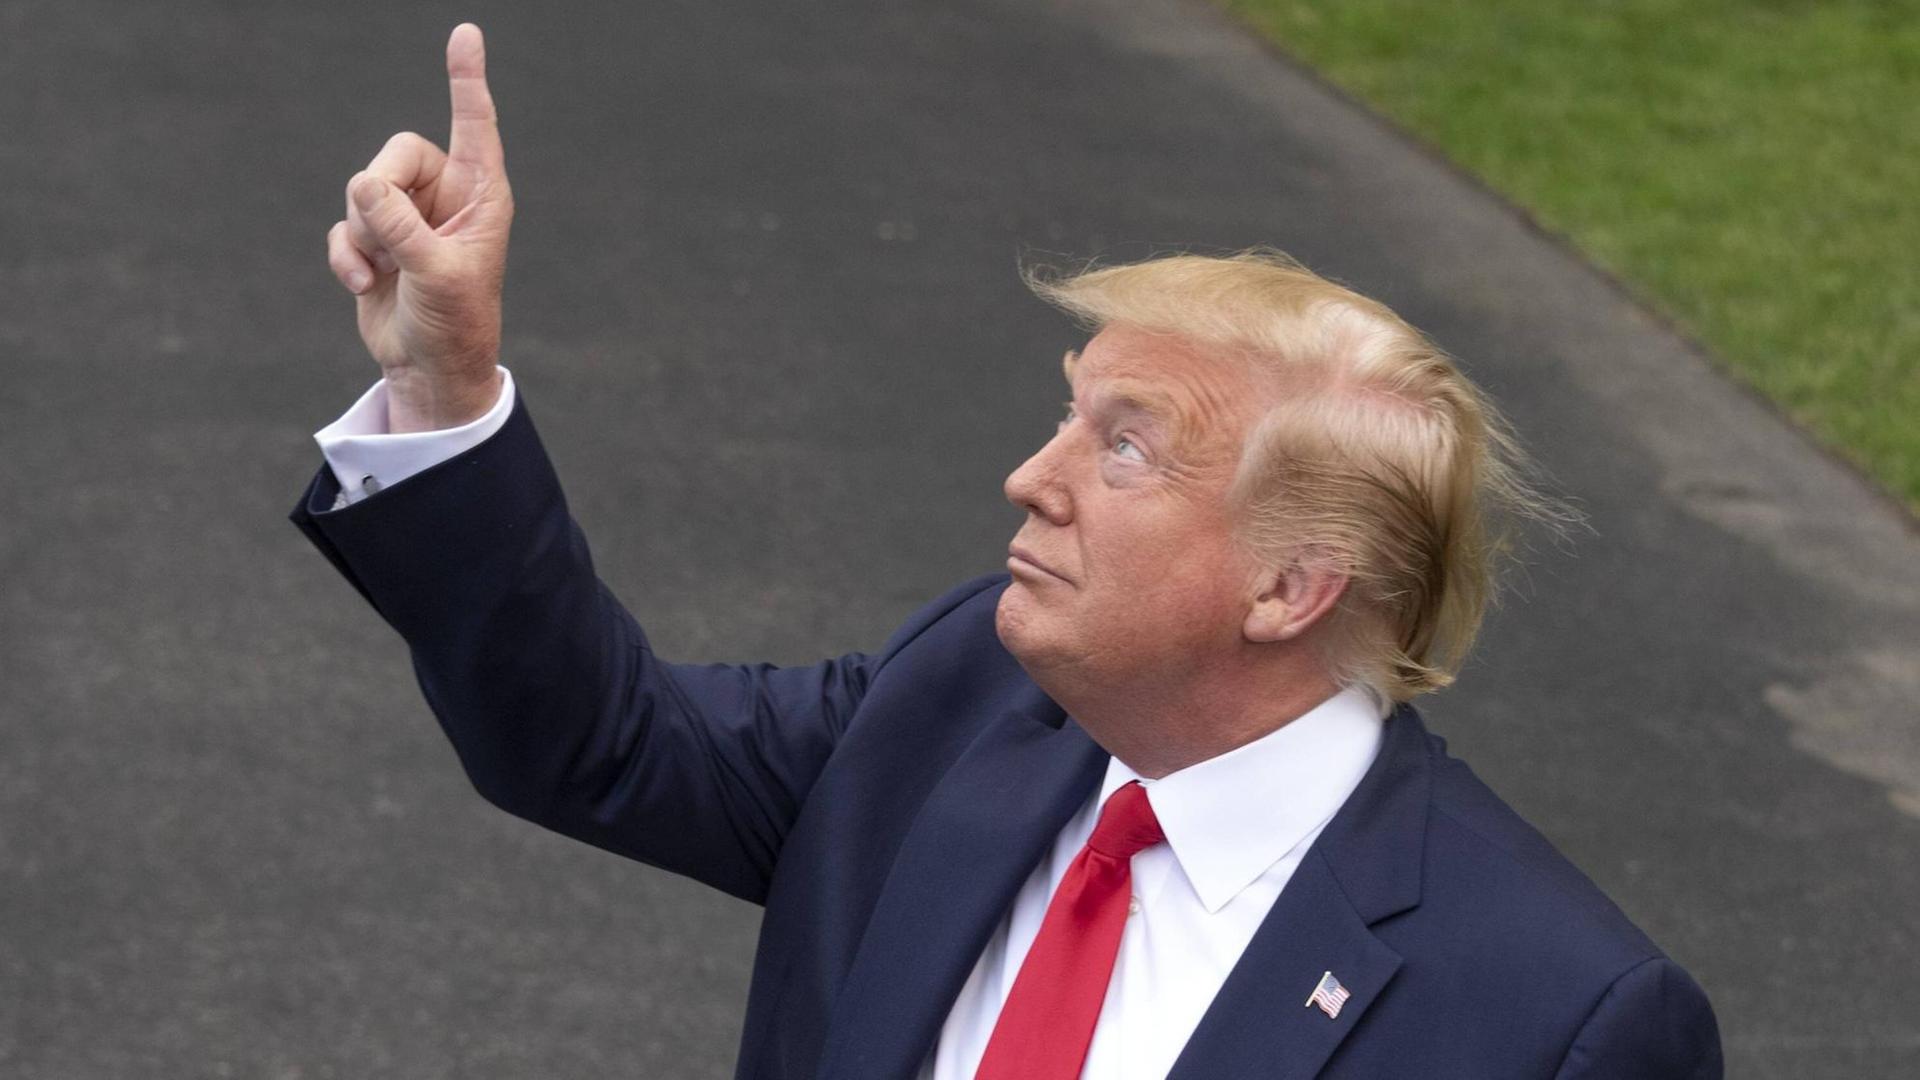 Donald Trump mit roter Kravatte, zeigt in den Himmel